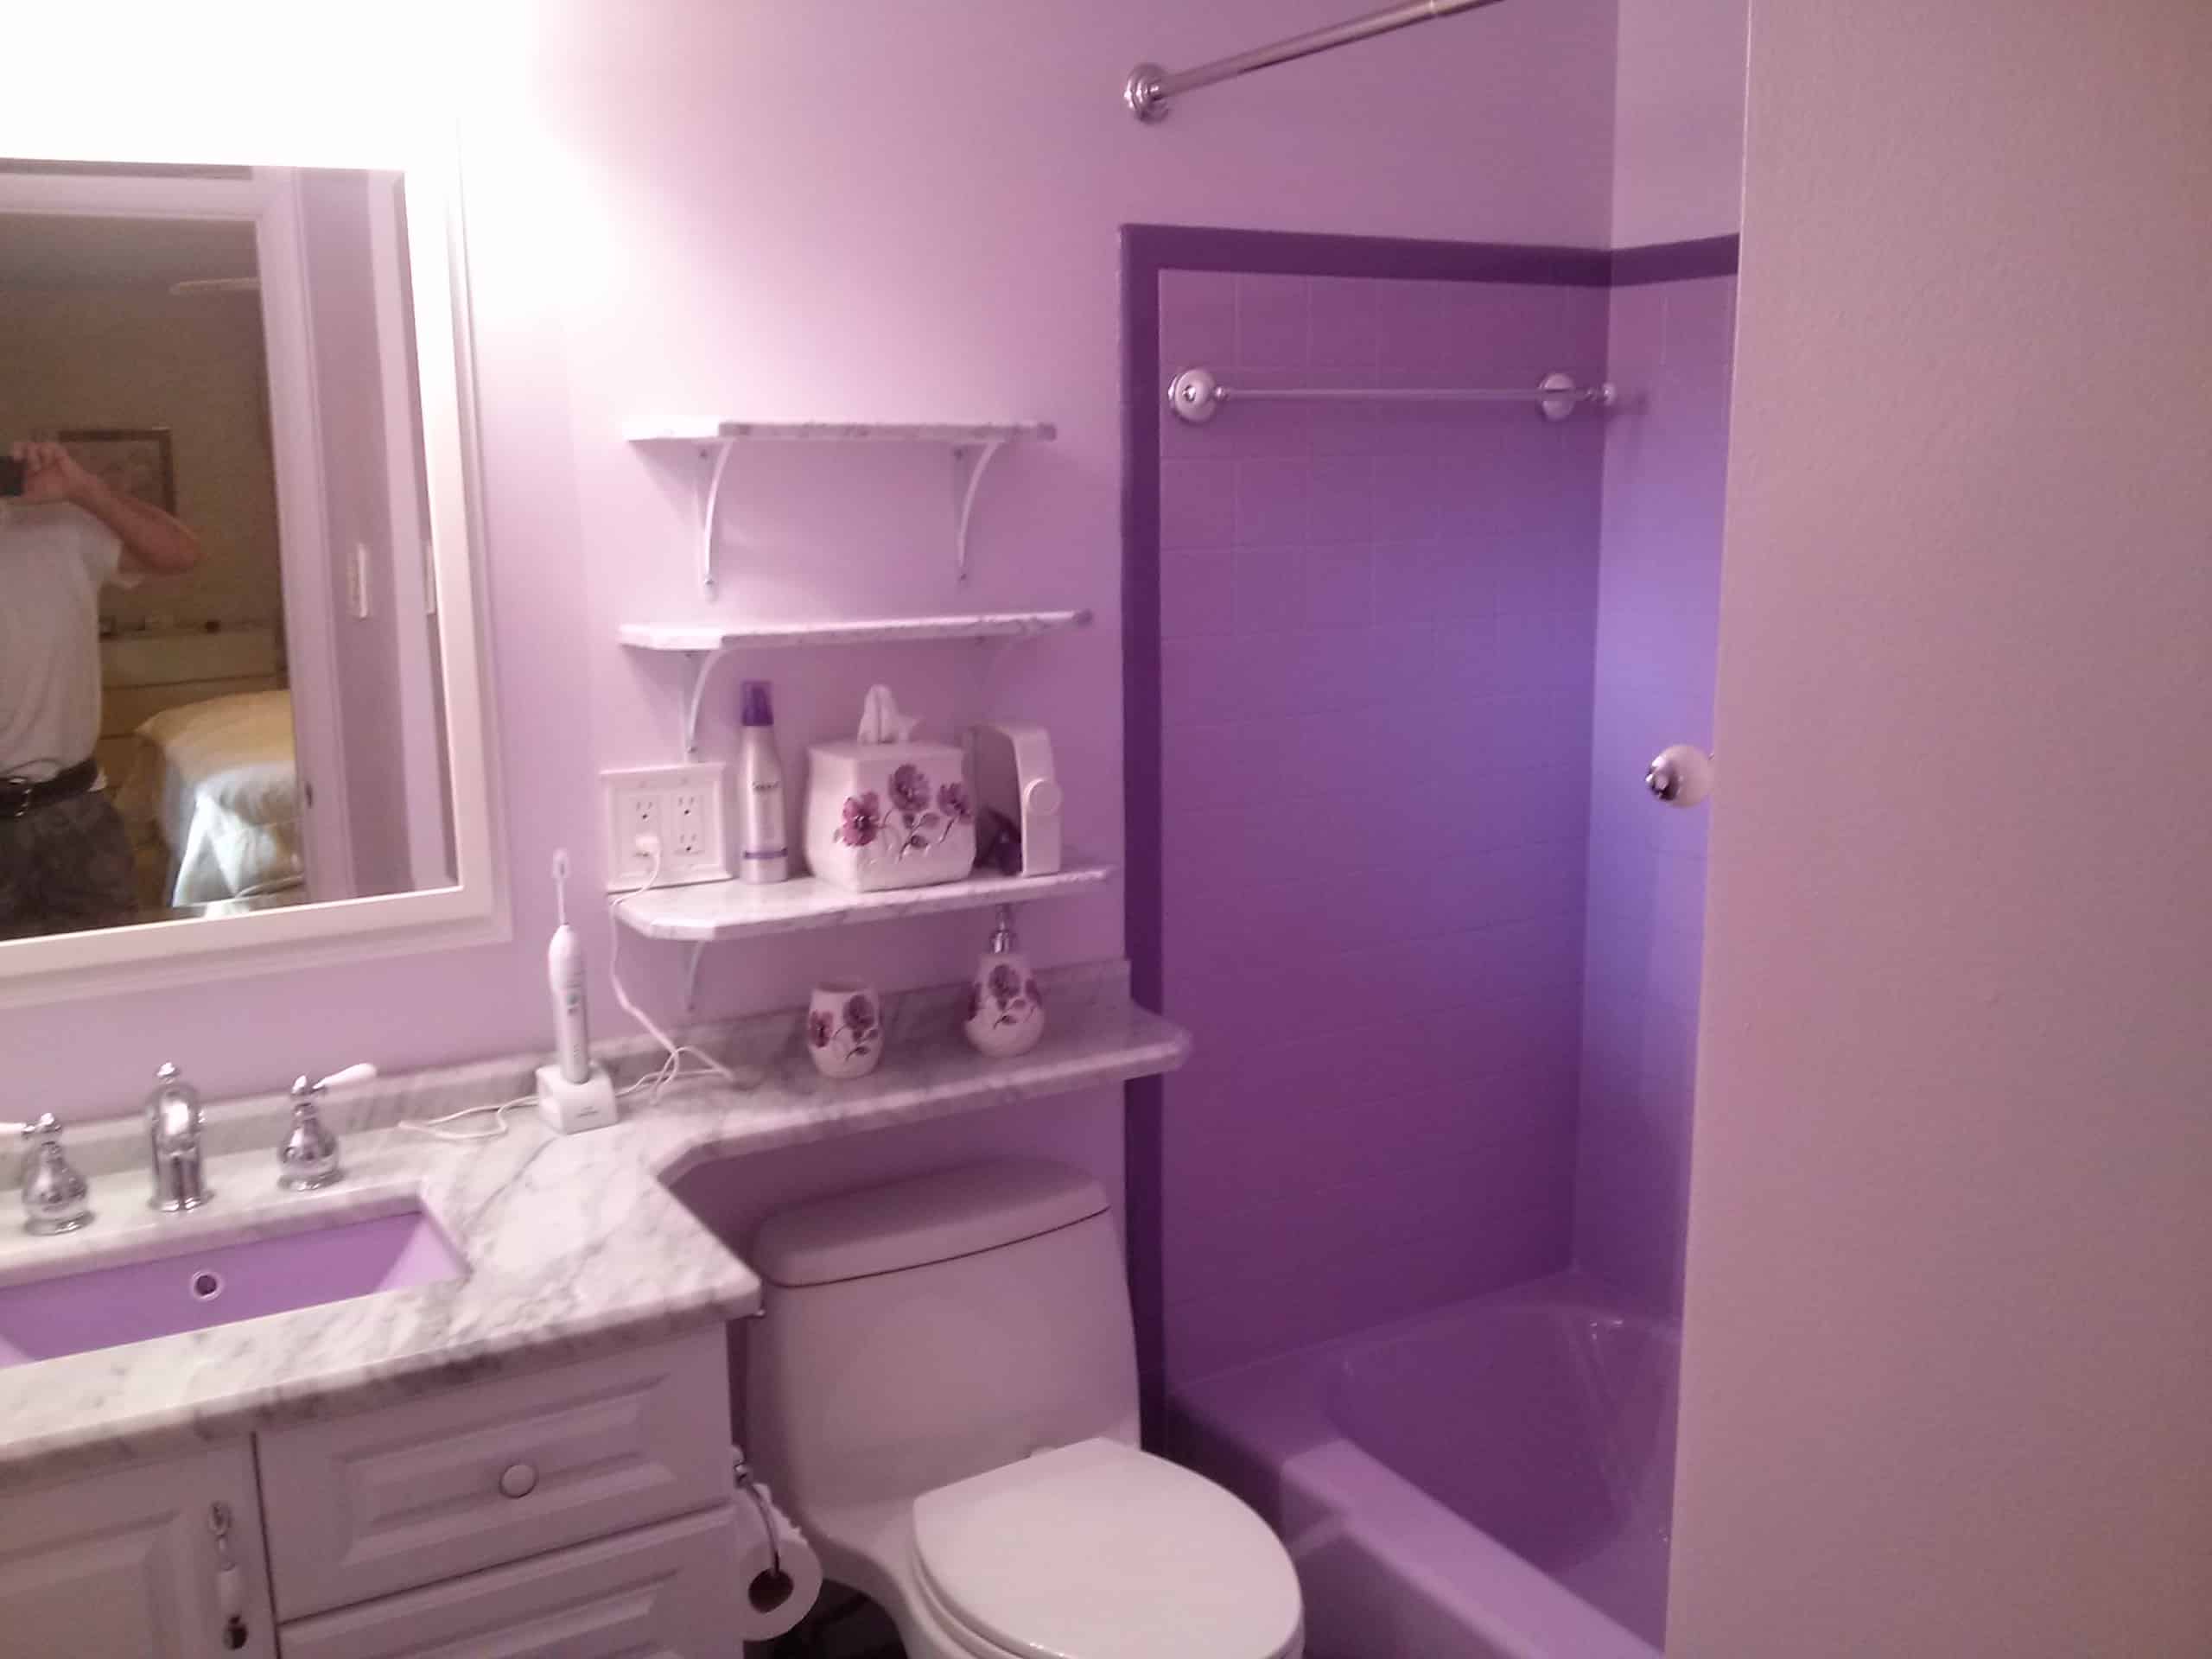 Maryland Bud Bathroom Renovation Ideas Solutions